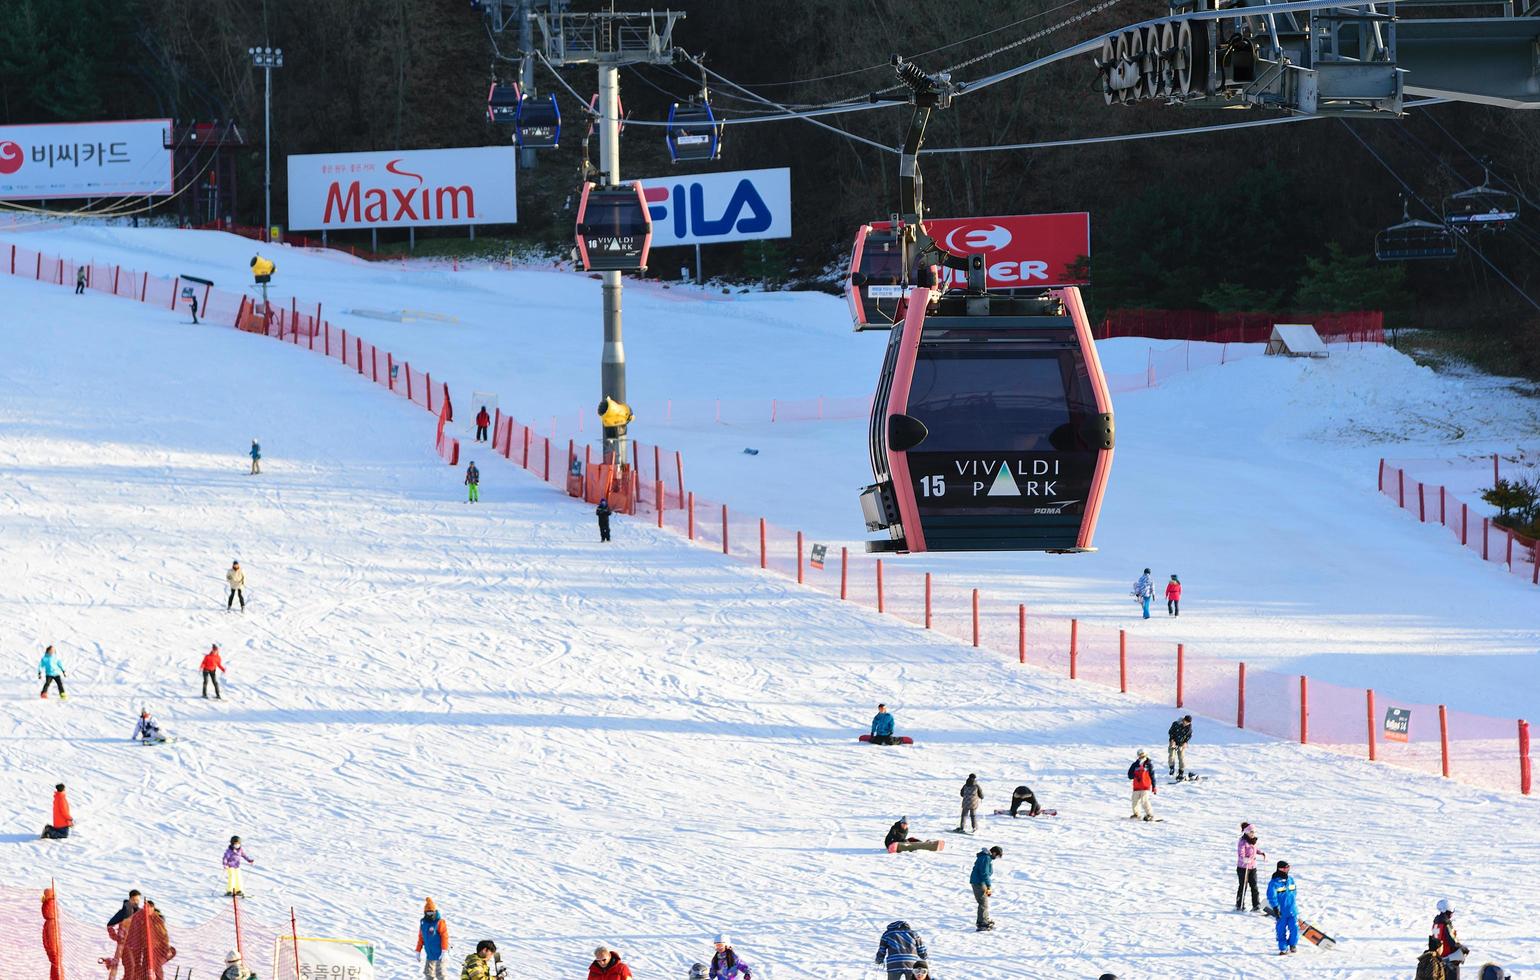 Ski lift tram above people on snow at Vivaldi Park Ski World in Korea photo